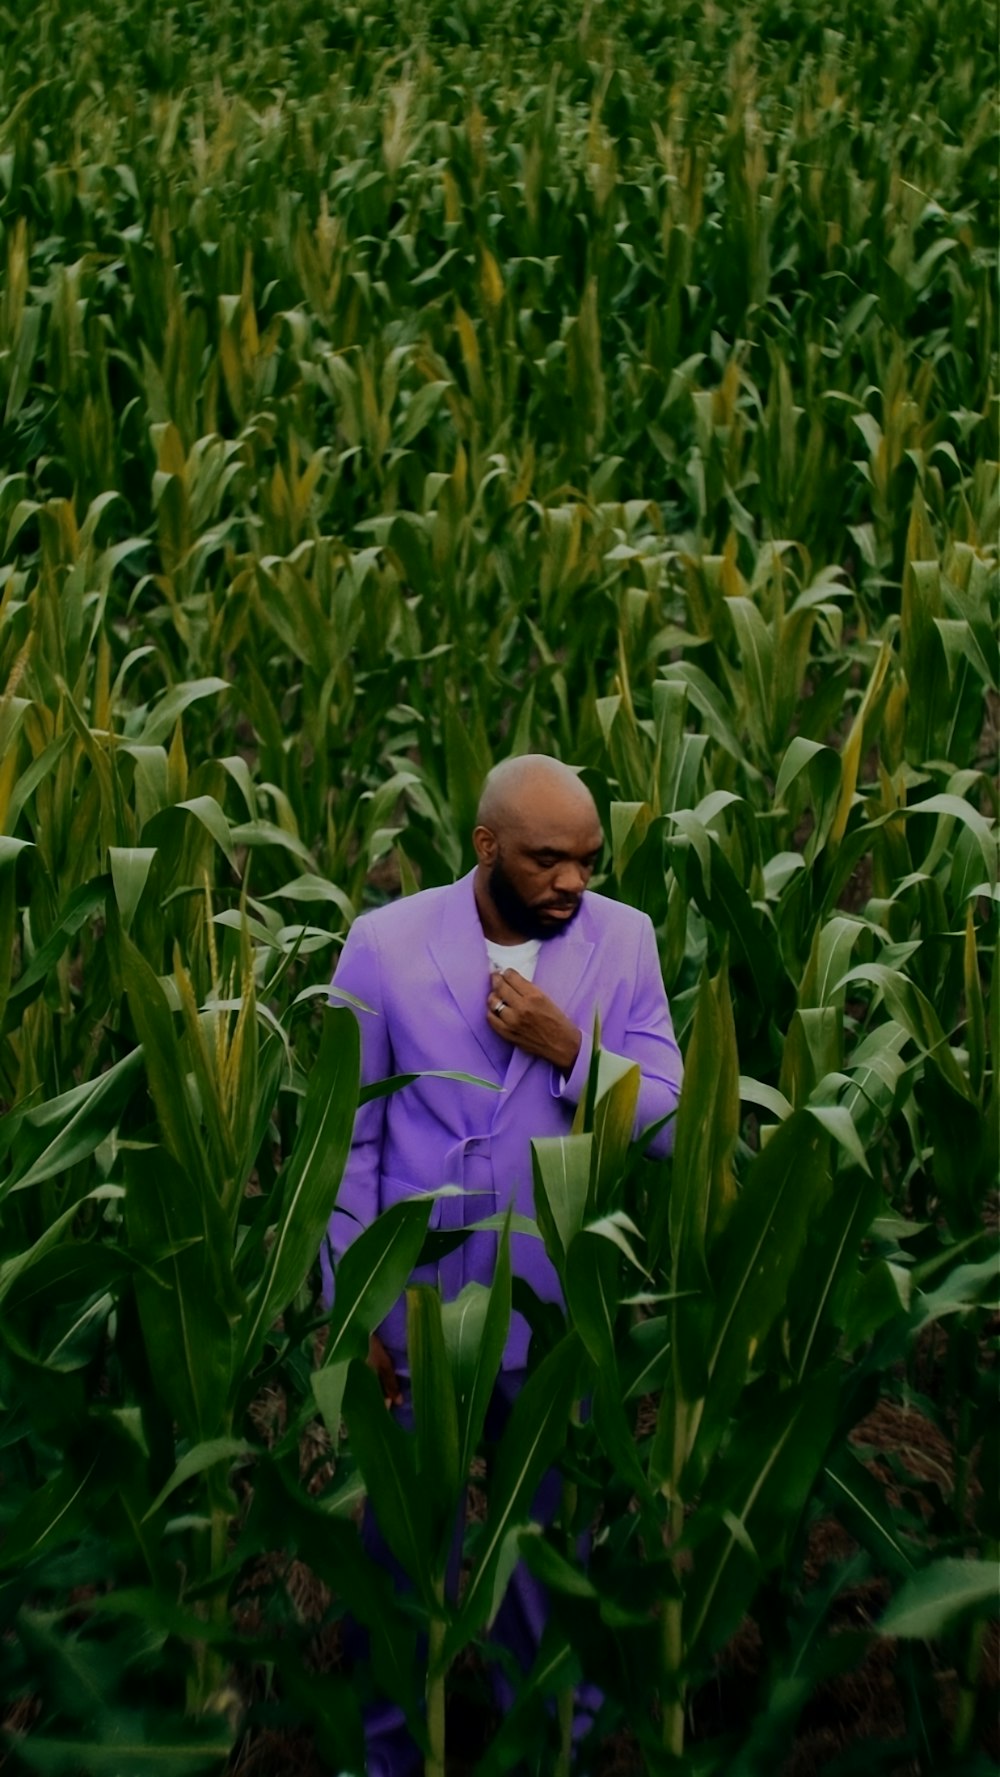 un hombre de pie en un campo de maíz